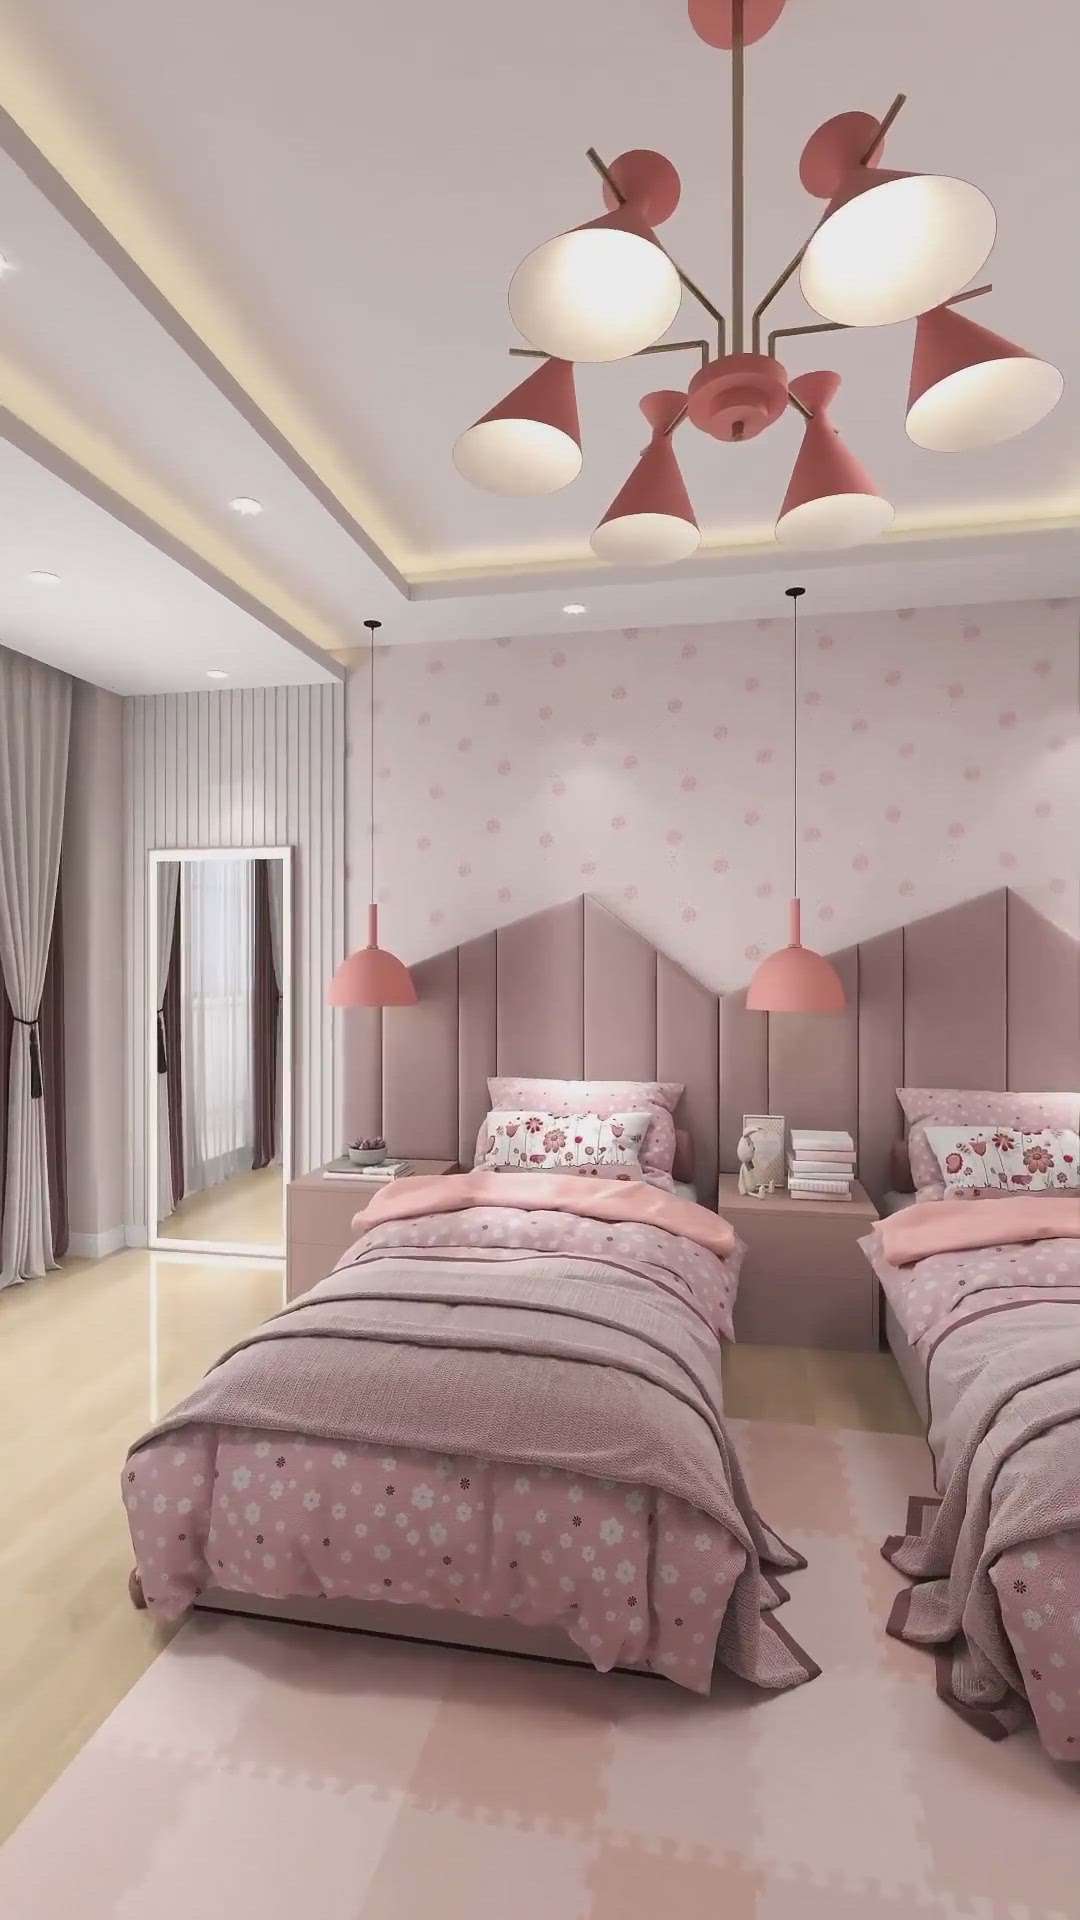 Kids Bedroom Concept...😍
#kidsroomdesign 
#reels
#reflexinterior 
#moderninteriordesign